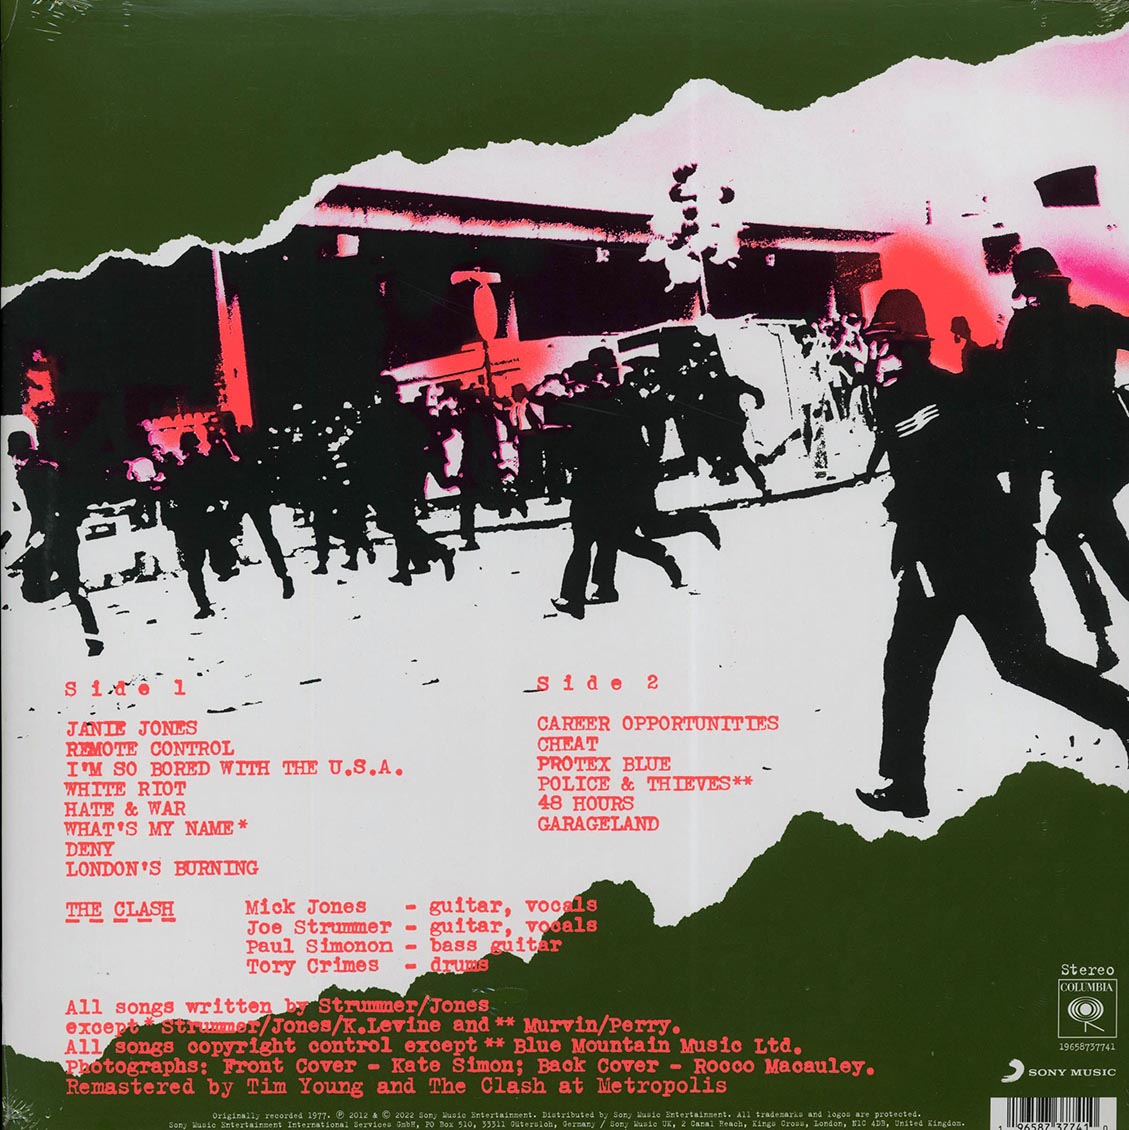 The Clash - The Clash (ltd. ed.) (pink vinyl) - Vinyl LP, LP